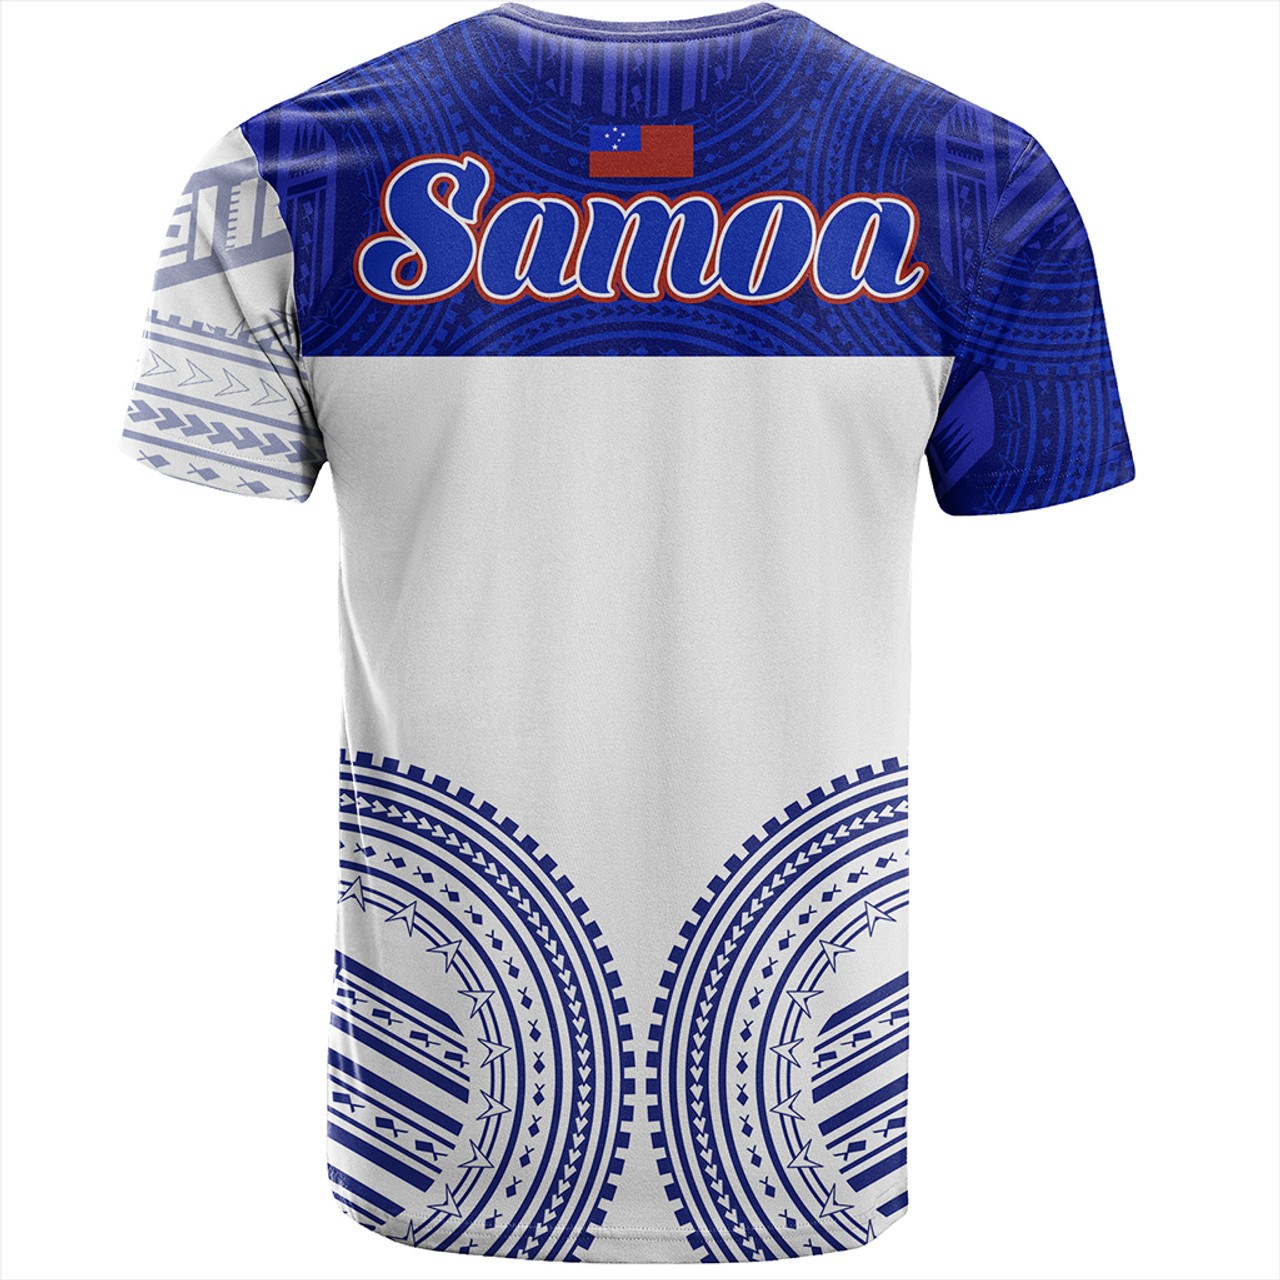 Samoa T-Shirt Polynesian Tribal Style Sport